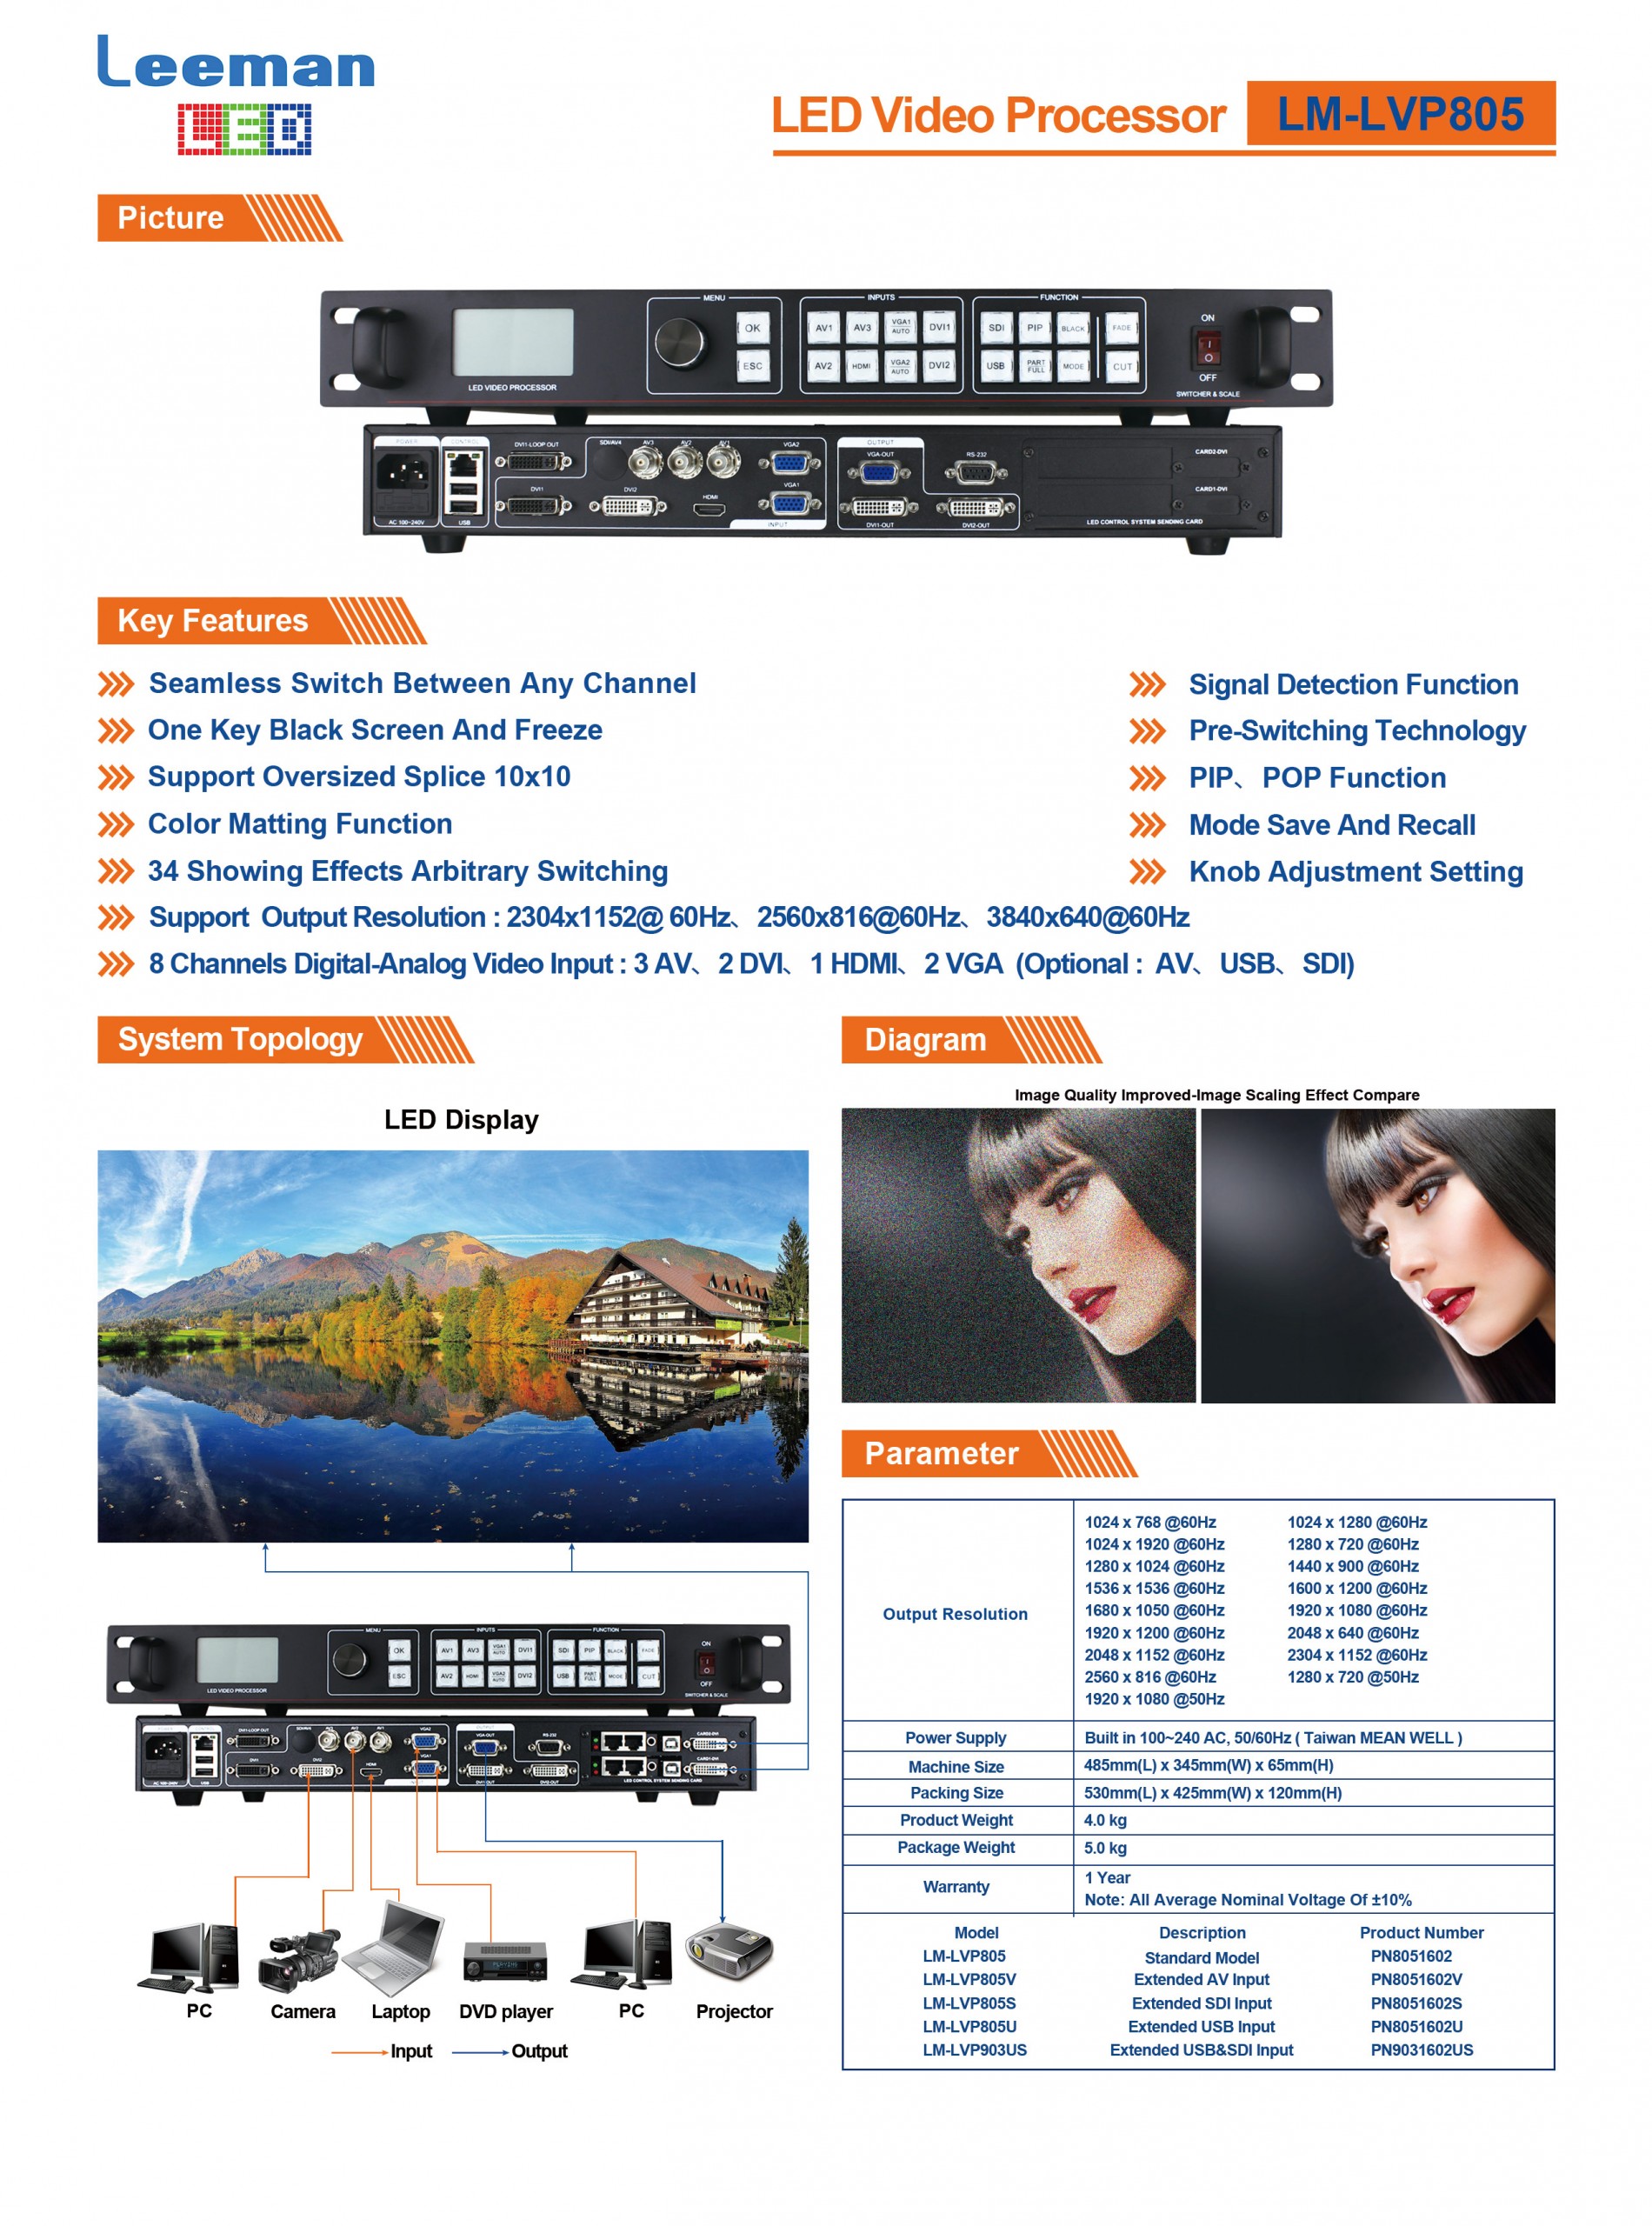 Kystar U1 Three-in-one LED Screen HD Video Processor